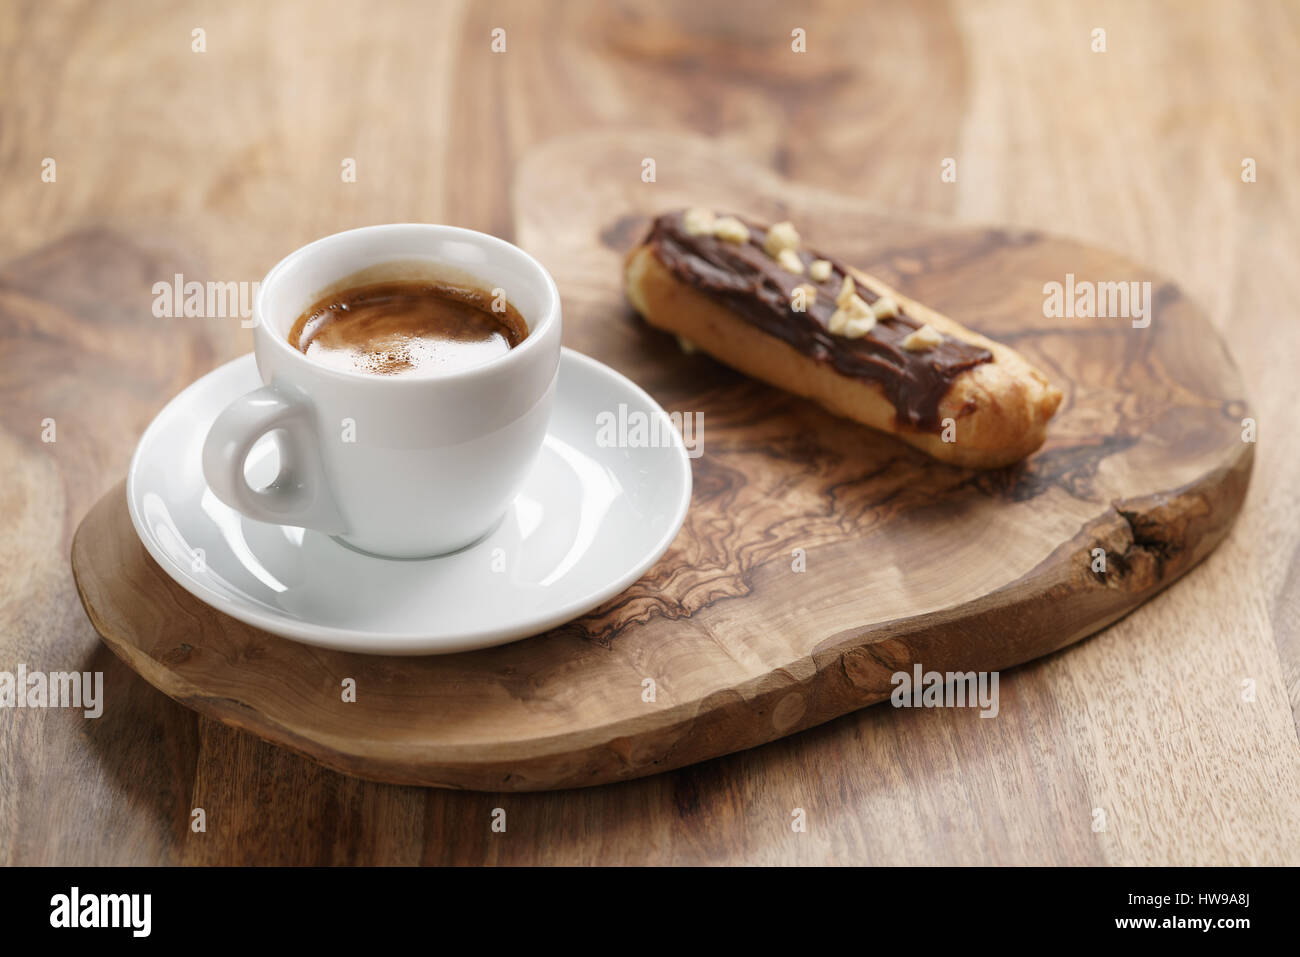 fresh espresso and eclair with hazelnuts Stock Photo